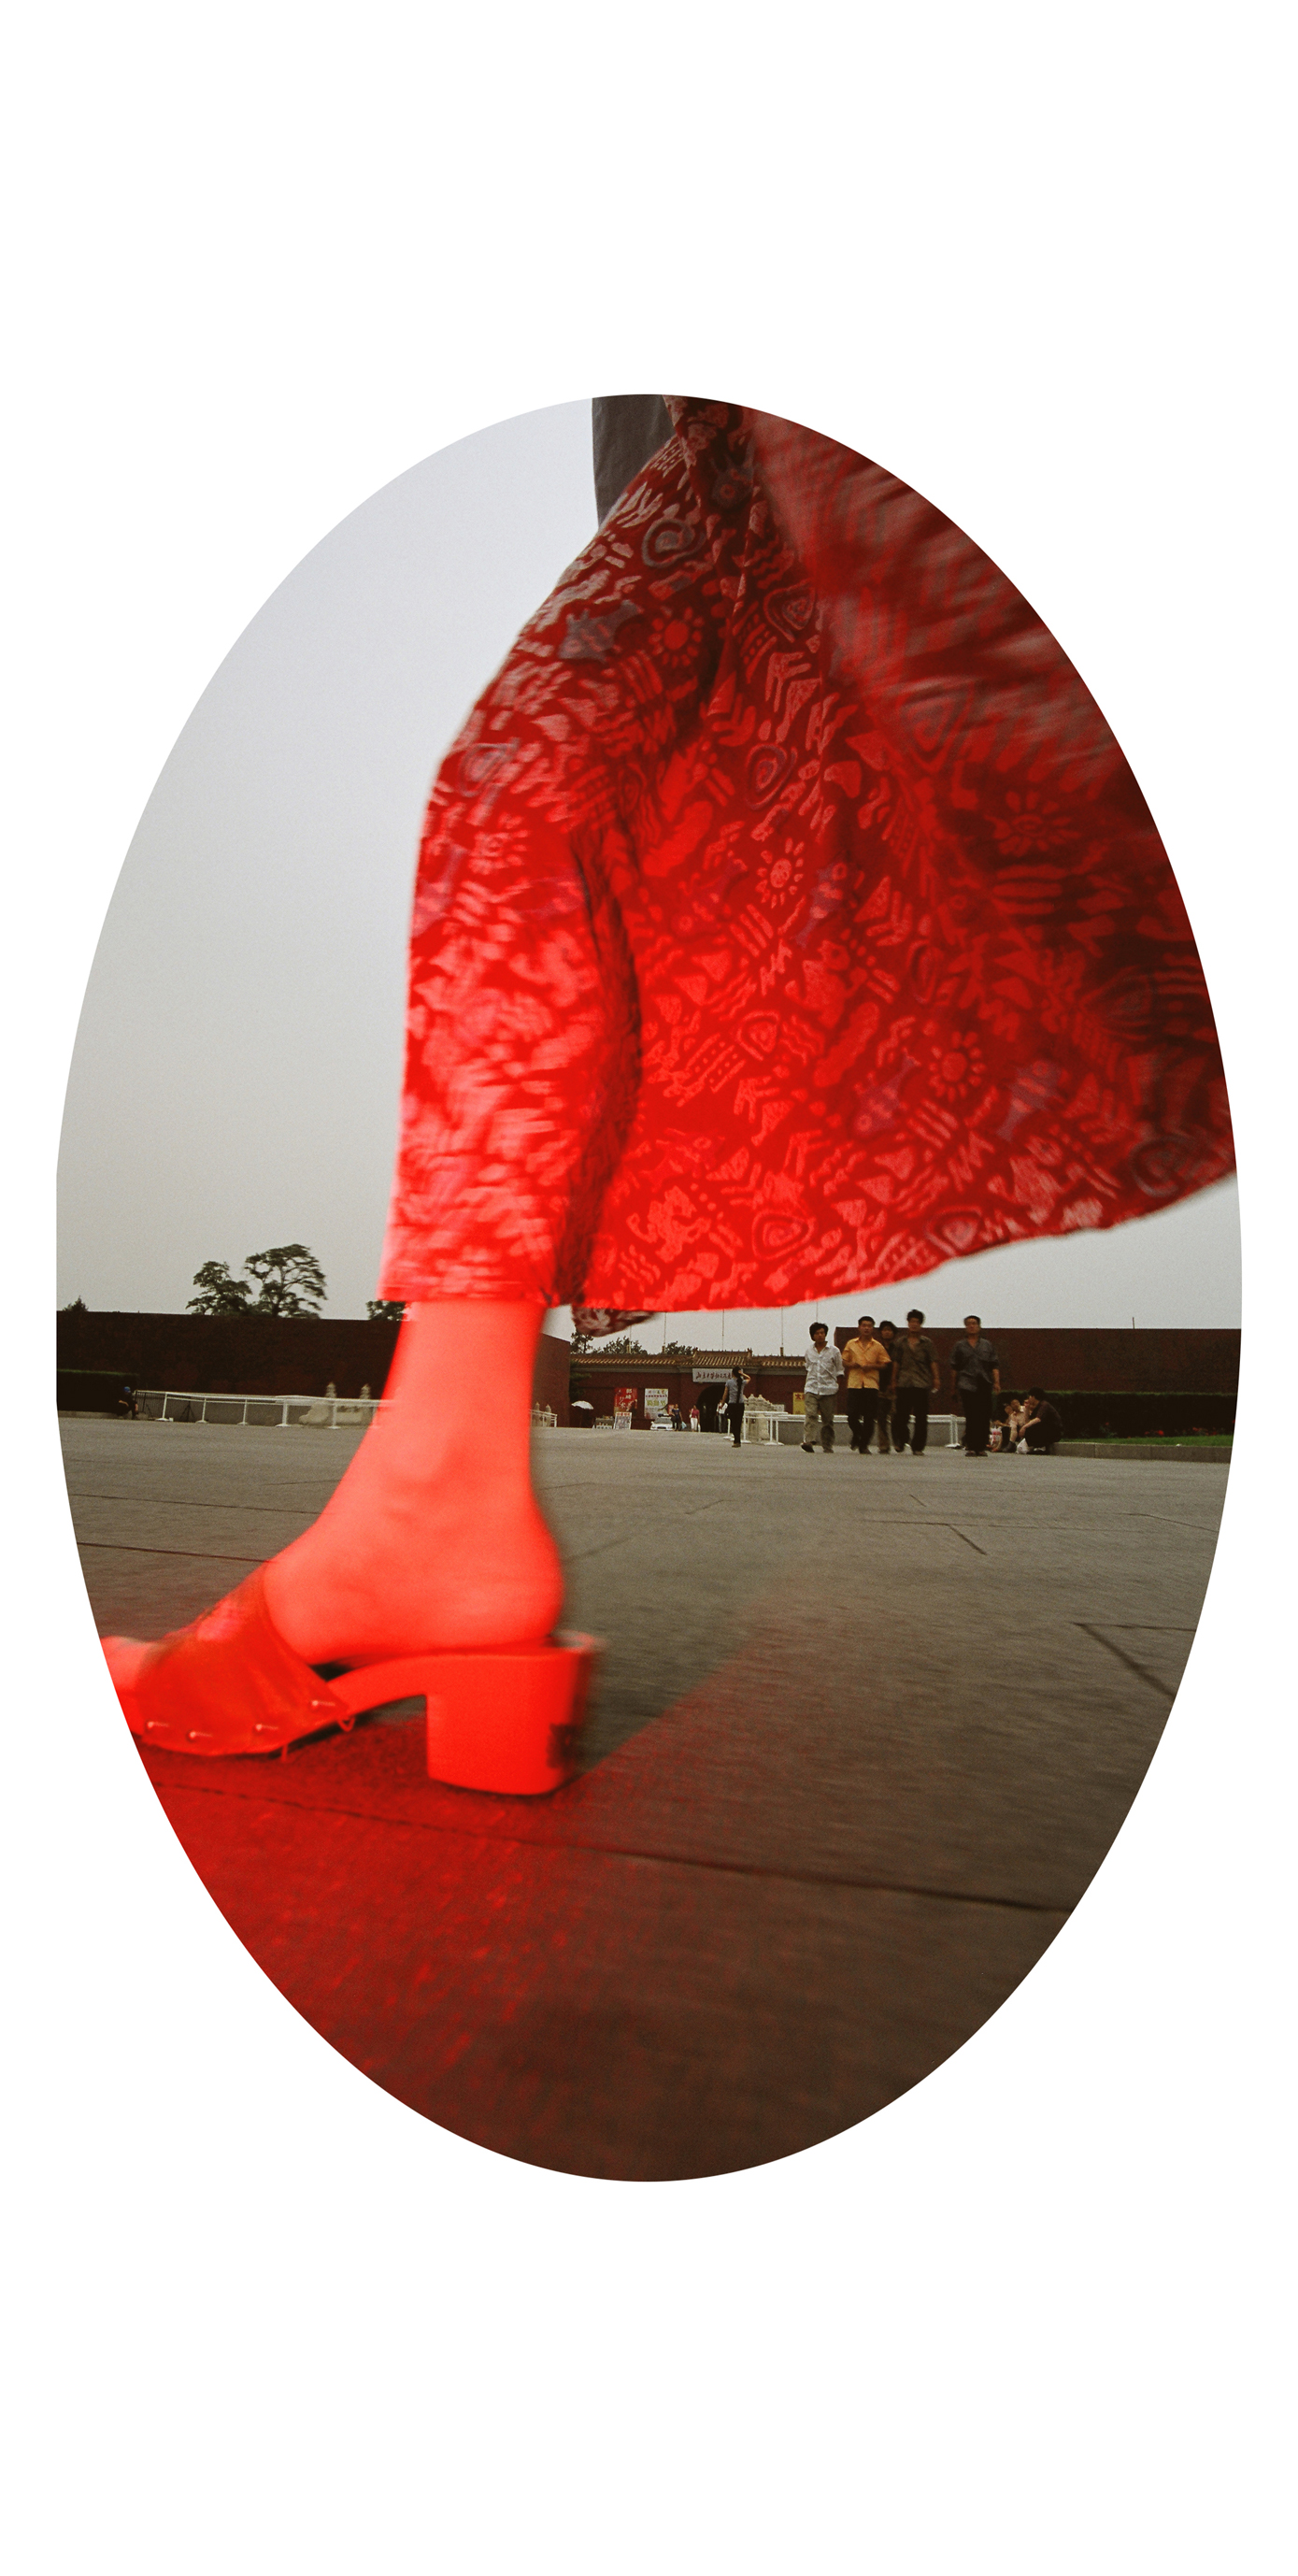 6 the unbearable lightness of Takako dress Moyi   Dog eye   Chongzi & her red skirt   10 moyi photography of china - Moyi (5) | Guest Post | Urban photography | Portrait photography - Guest Article: Moyi by Léo de Boisgisson